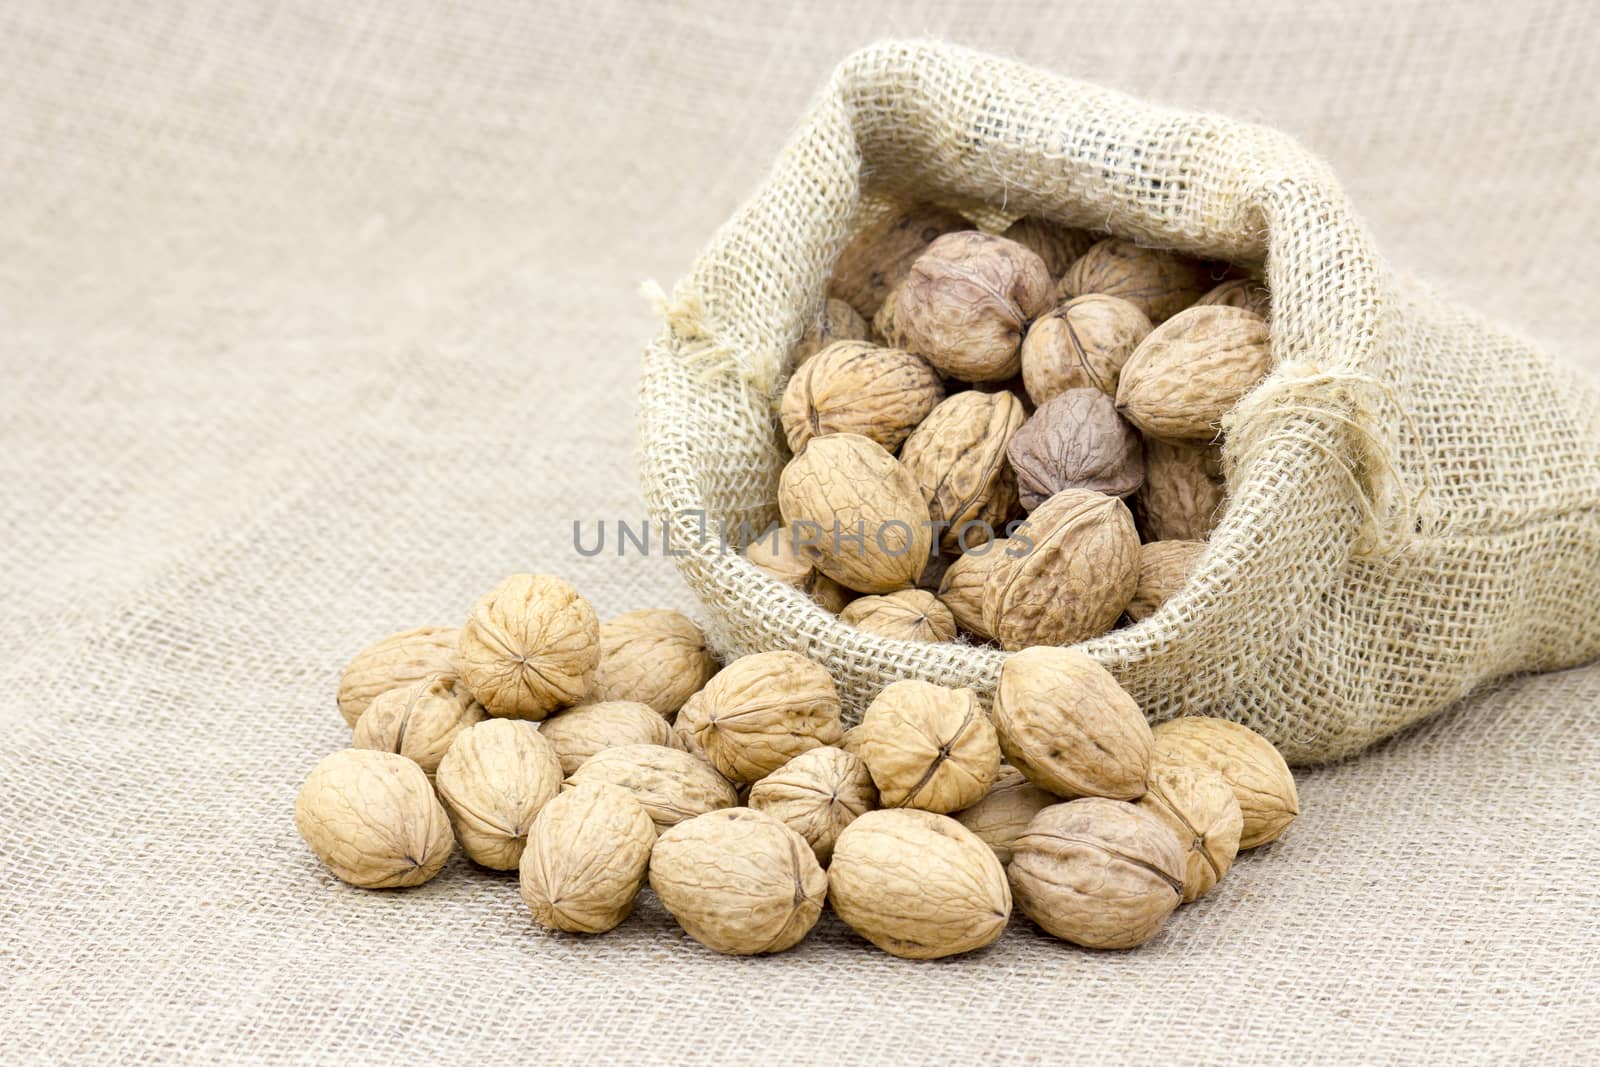 Burlap sack full of whole walnuts